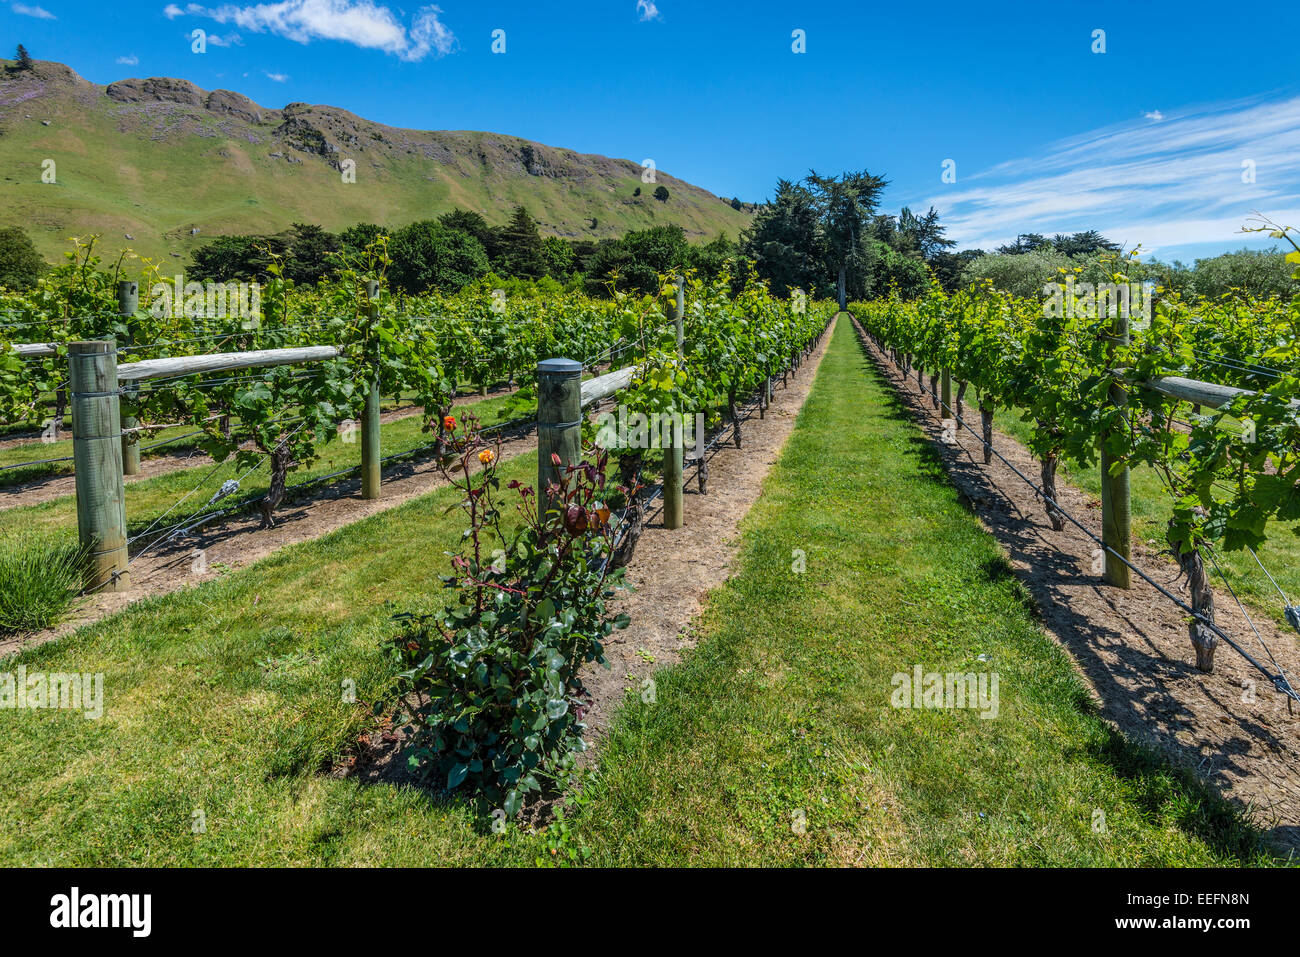 Nueva Zelanda bodega - perfecta formación de vides verdes levantándose en un cielo azul Foto de stock